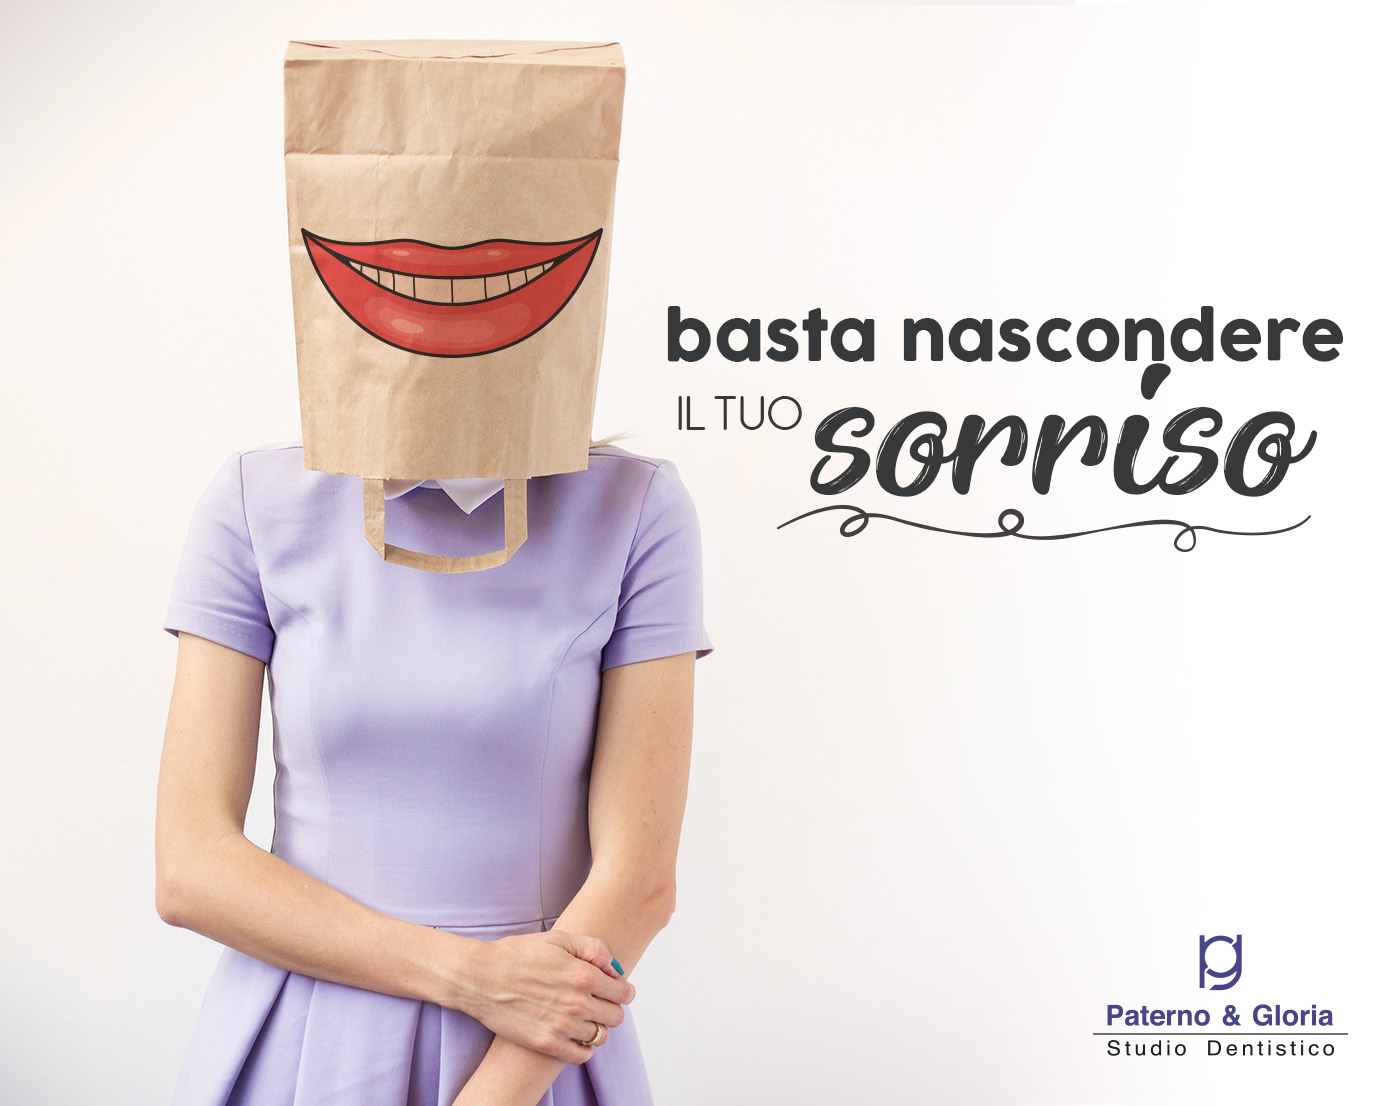 dental practice advertisign campaign, Paterno e Gloria